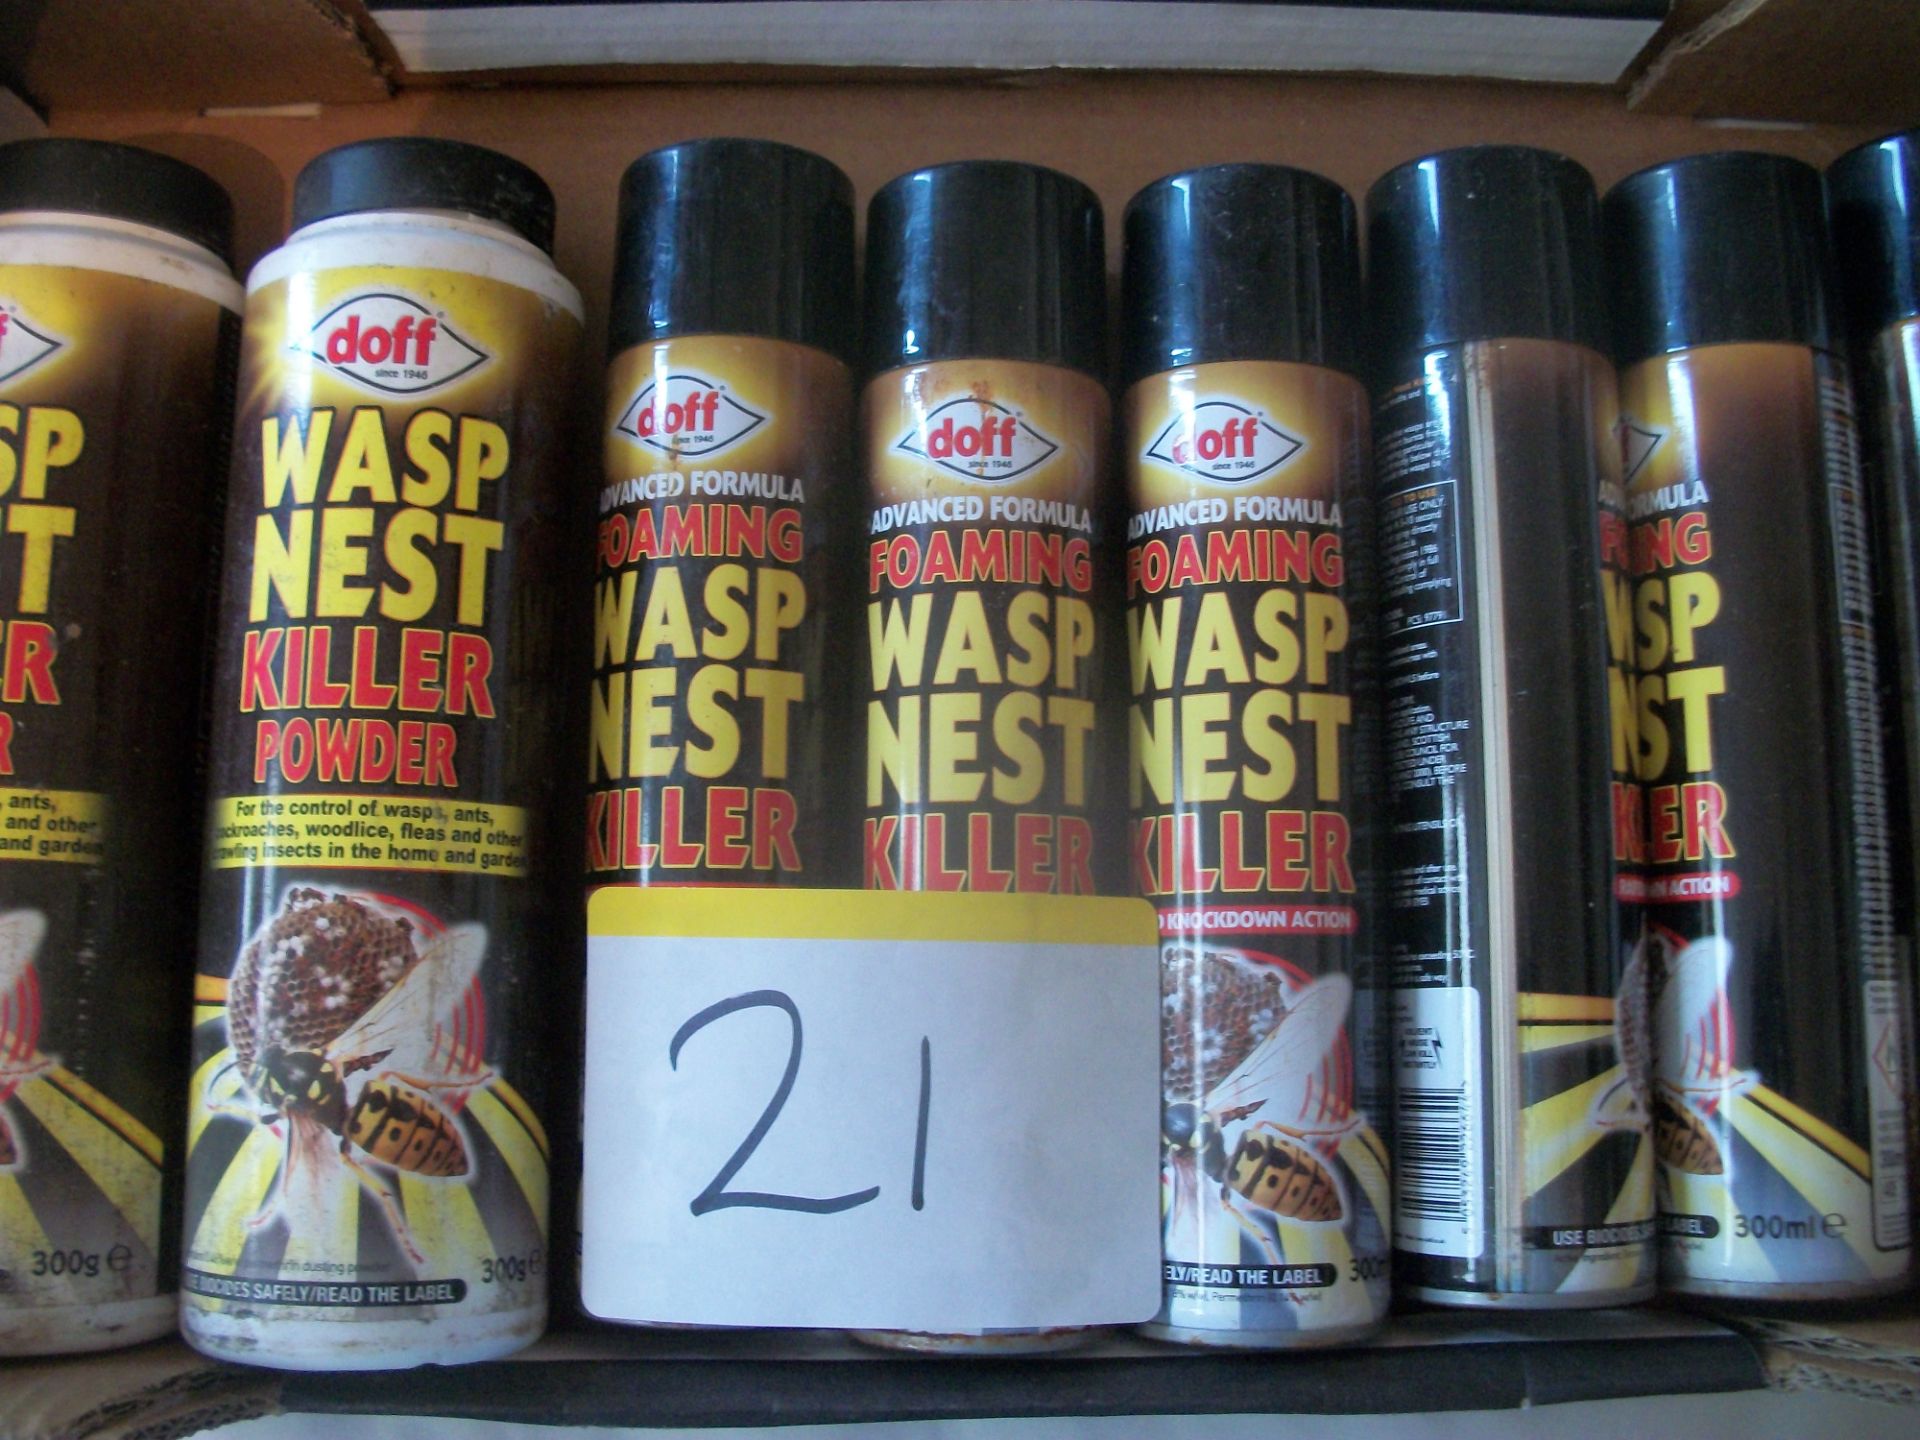 8 x Doff Wasp Nest Killer